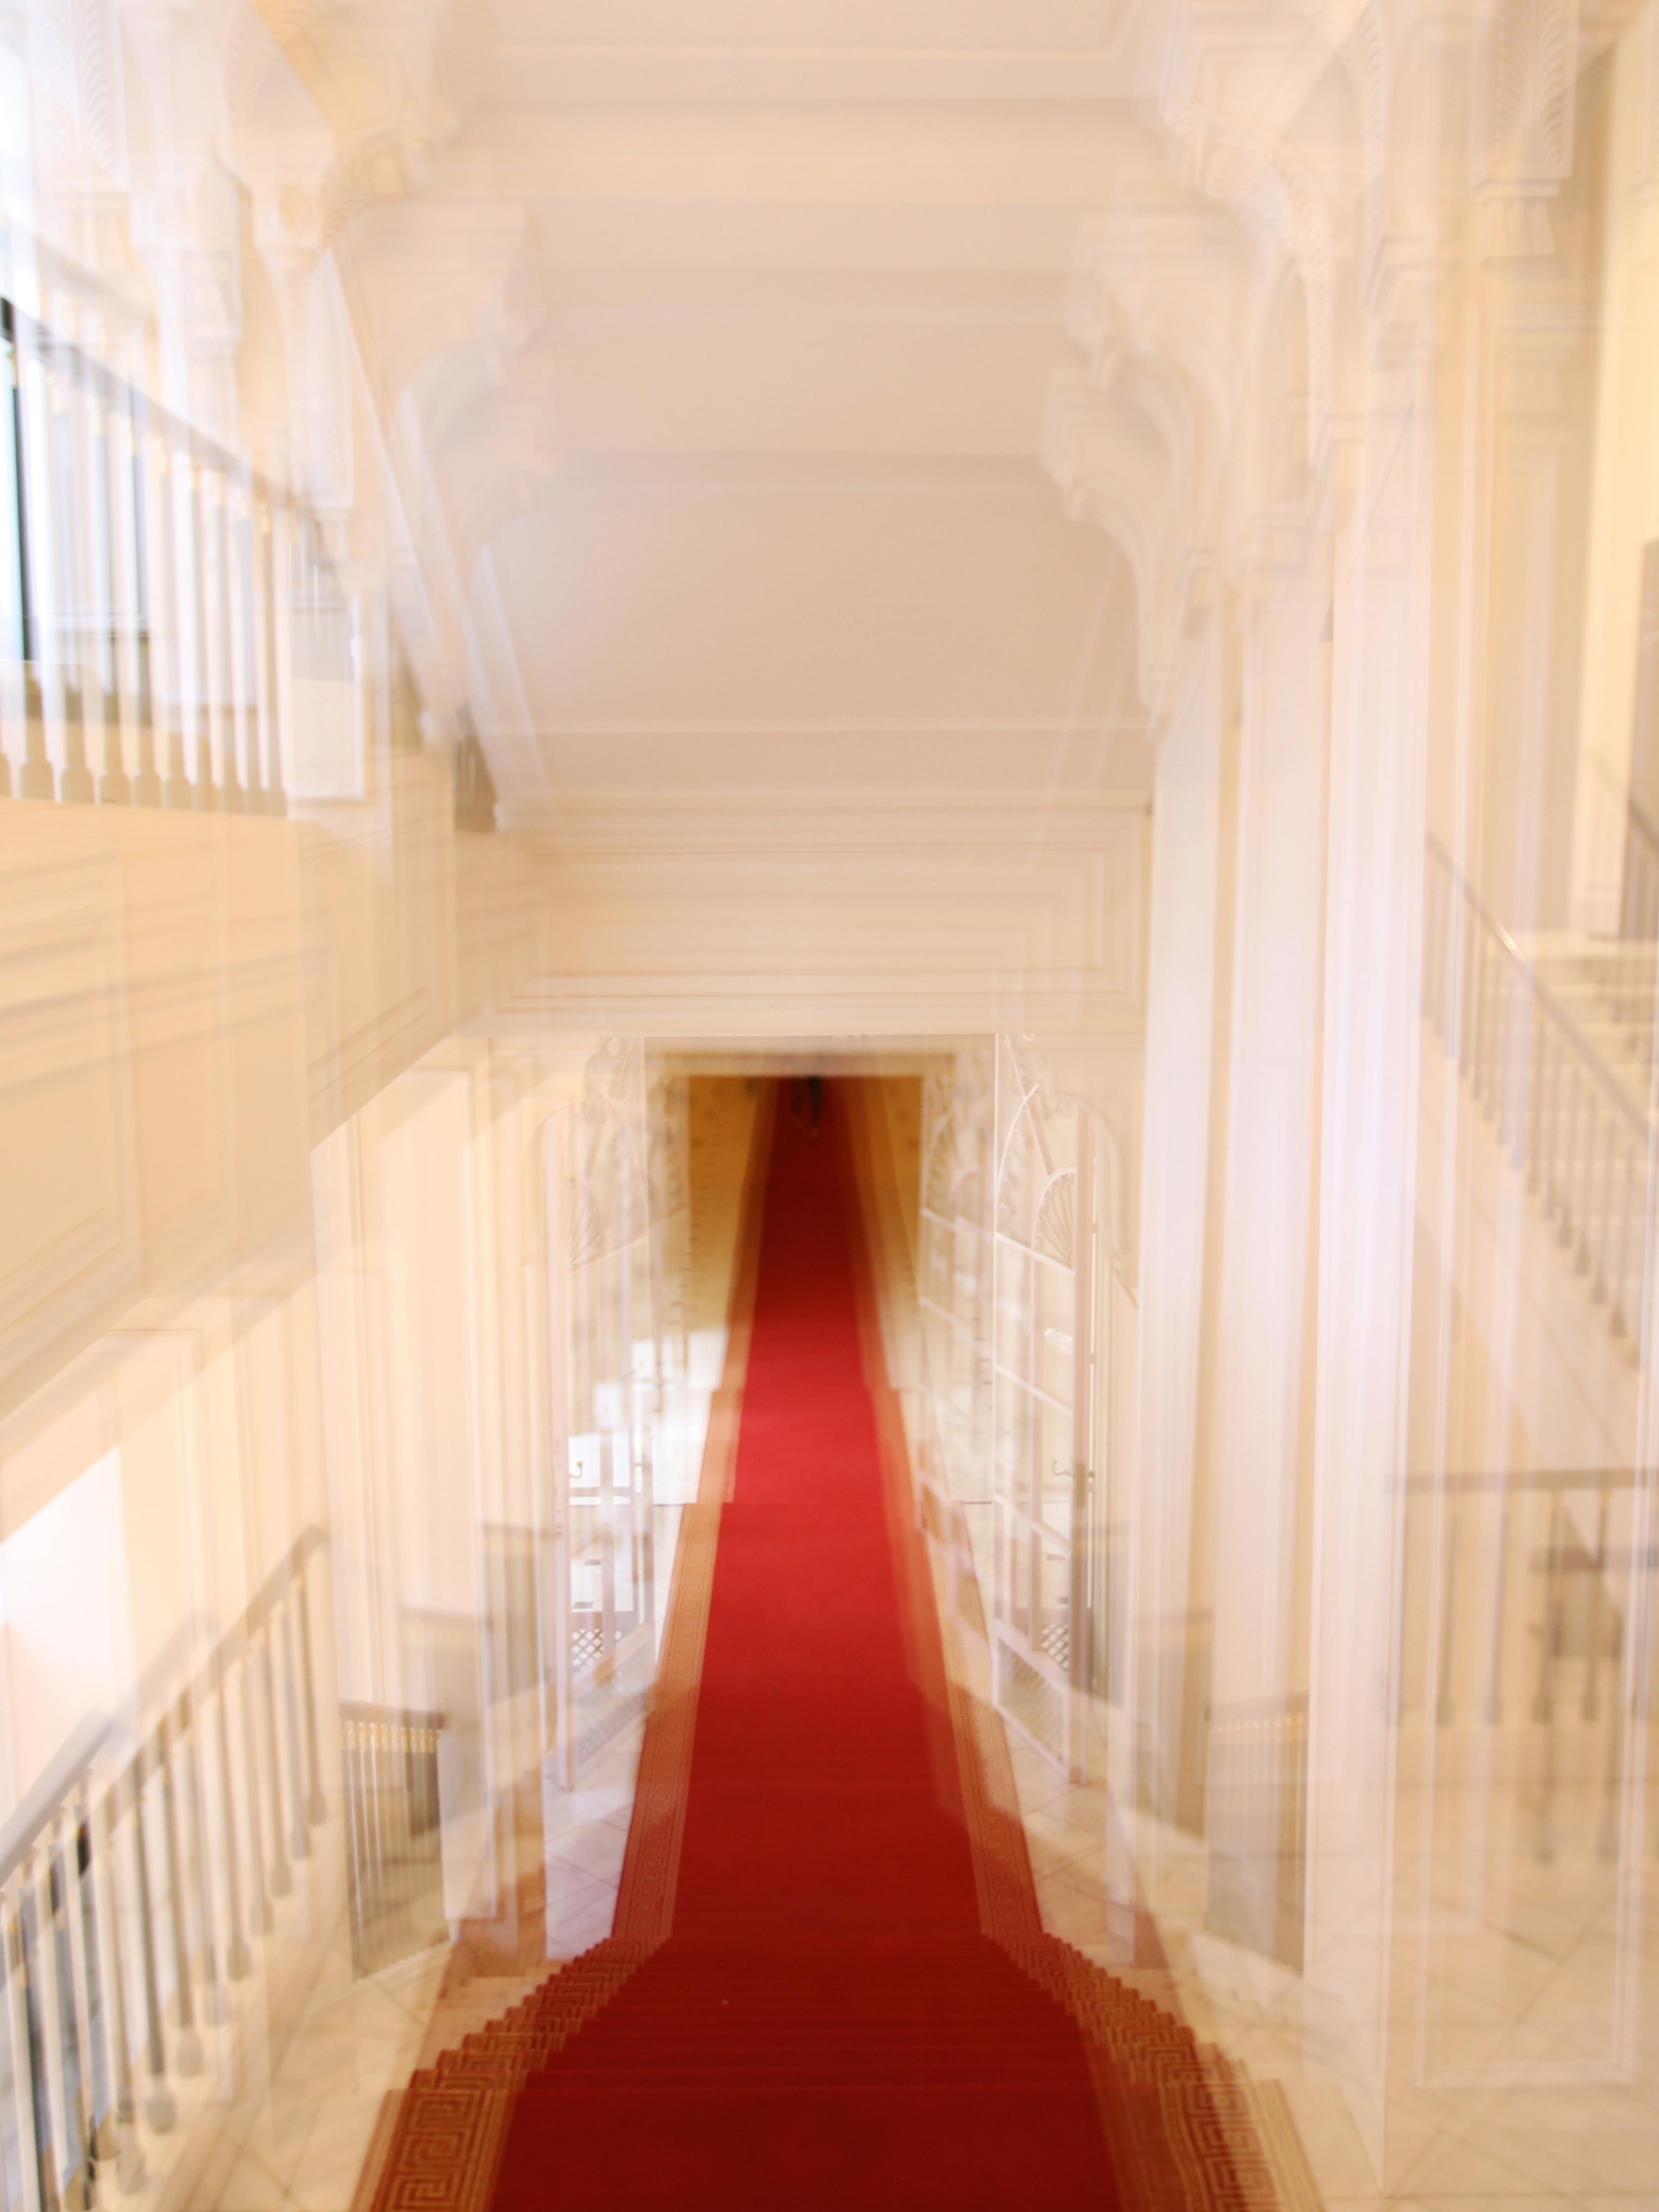 Magda Von Hanau Abstract Photograph - Albertina Palace Downstairs. Abstract architectural limited edition color photo